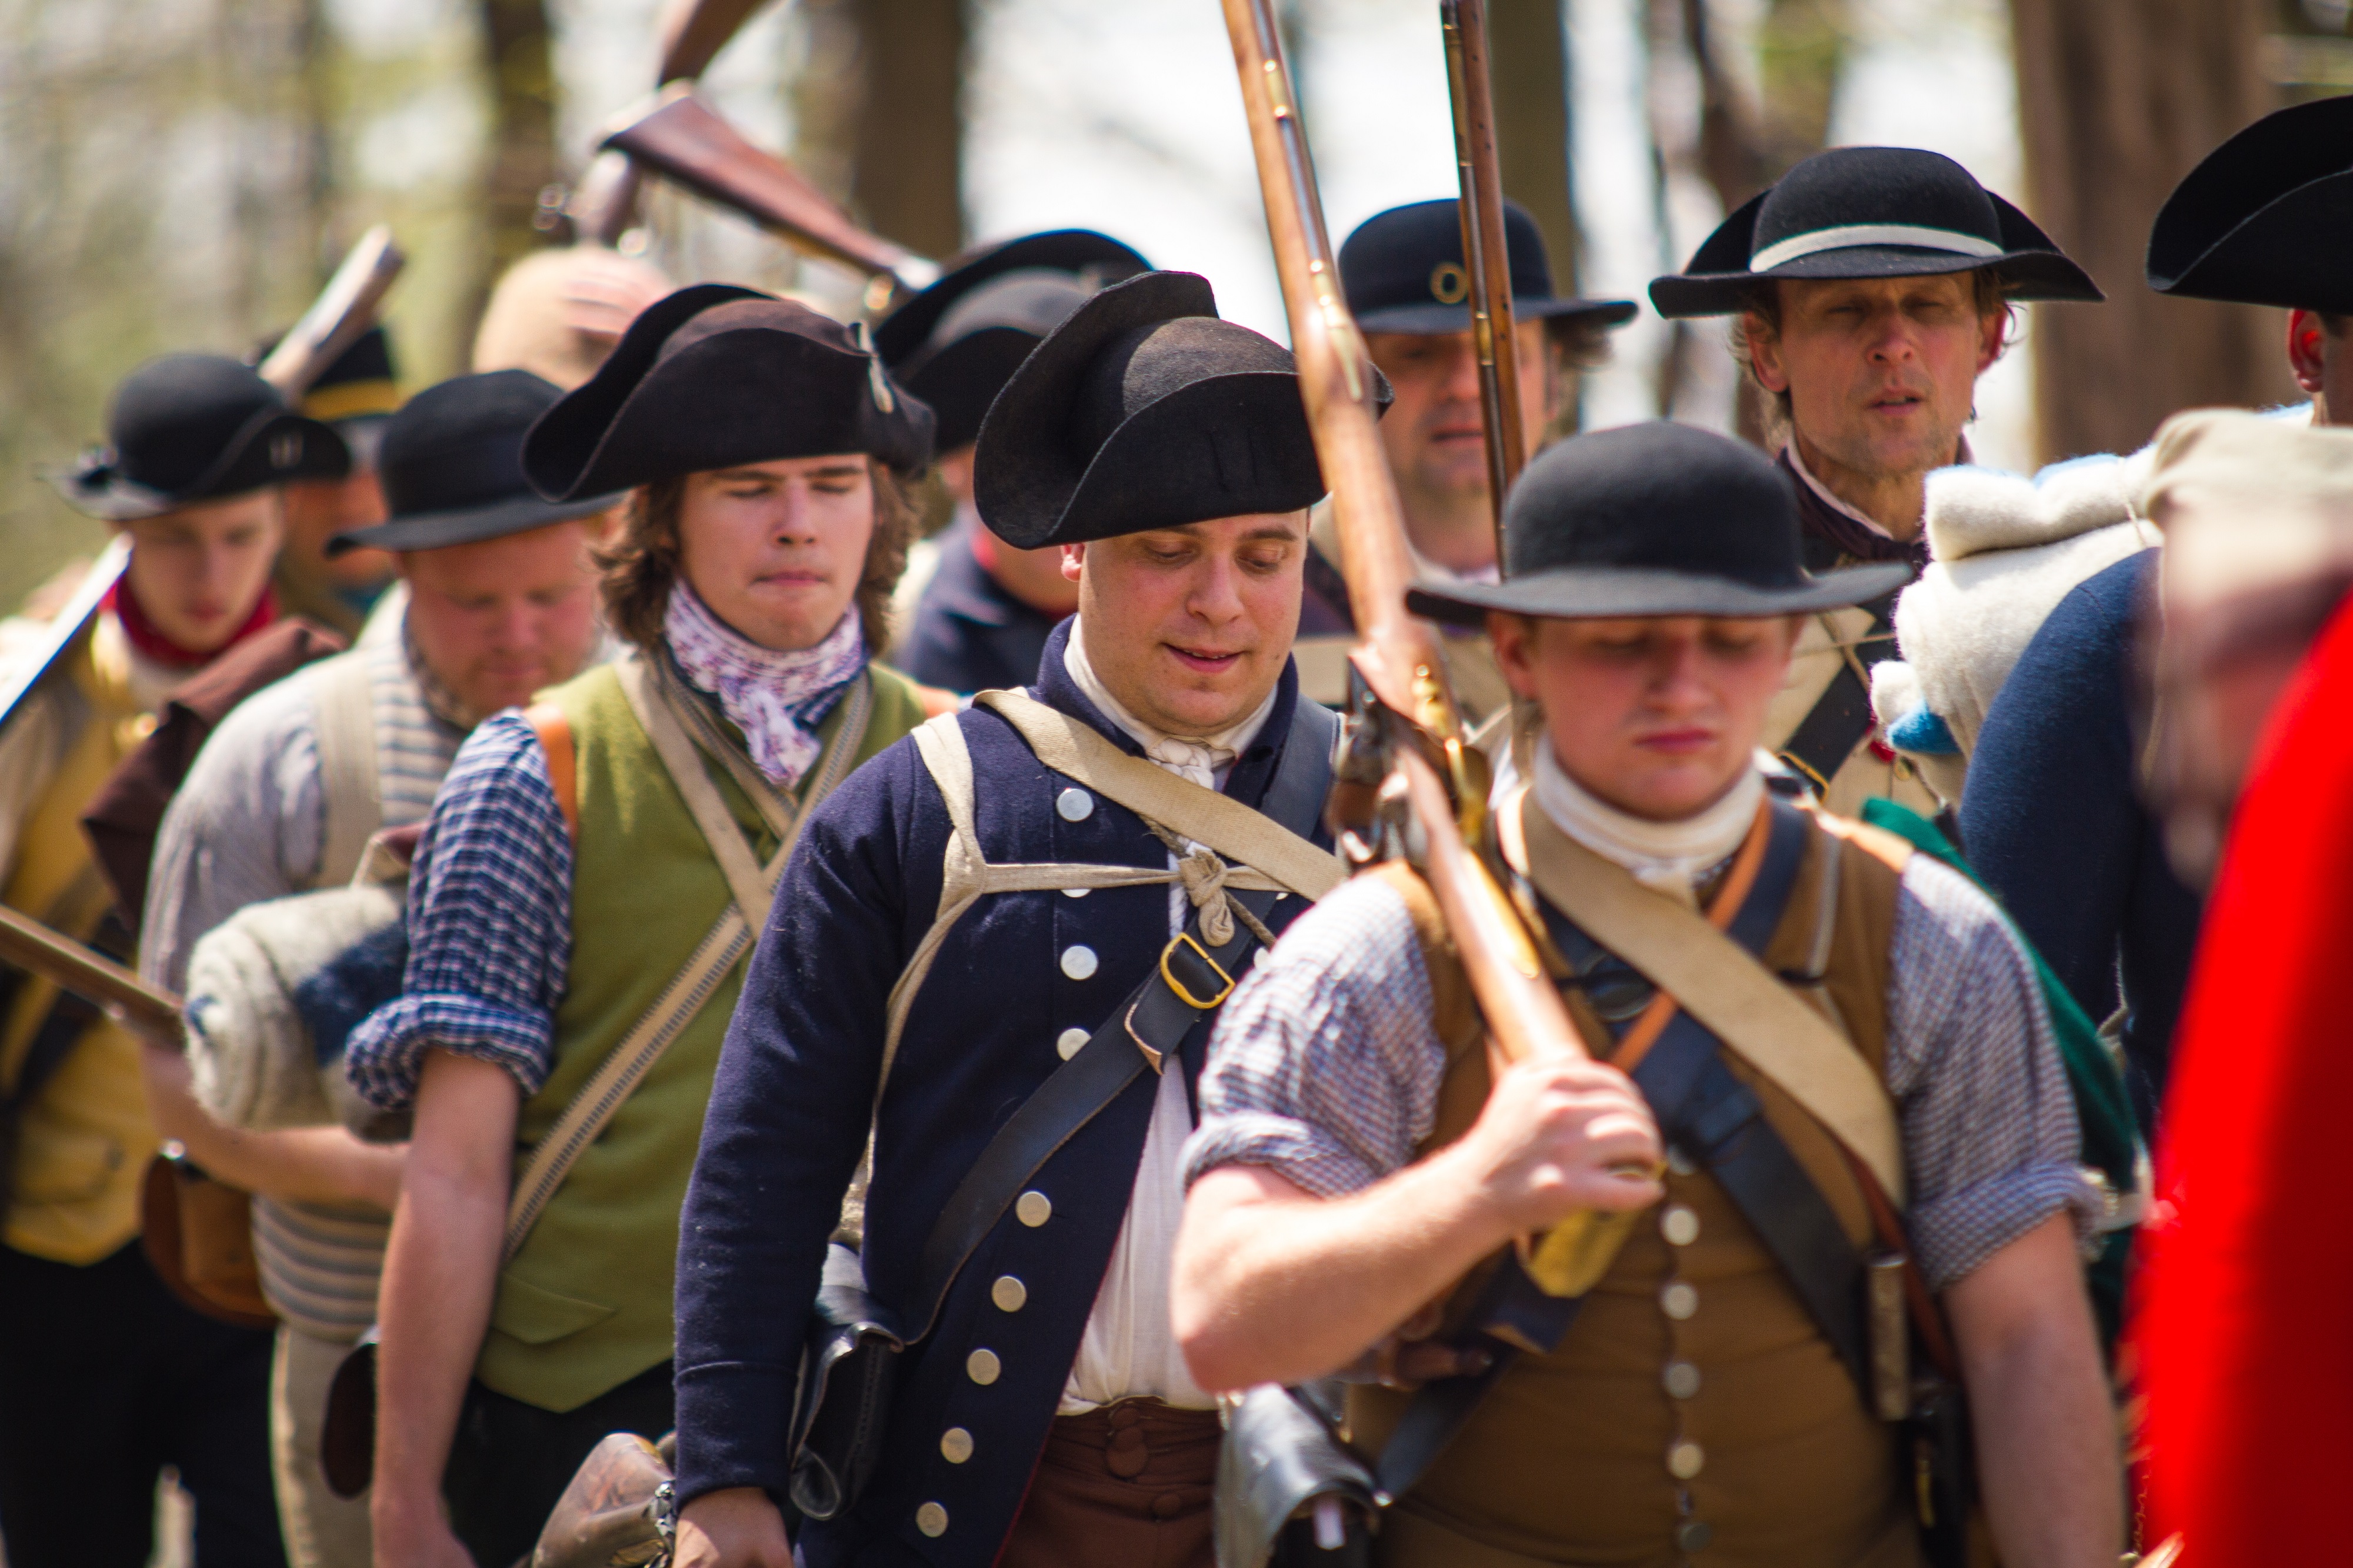 Battle of Carillon Reenactment at Fort Ticonderoga, New York 